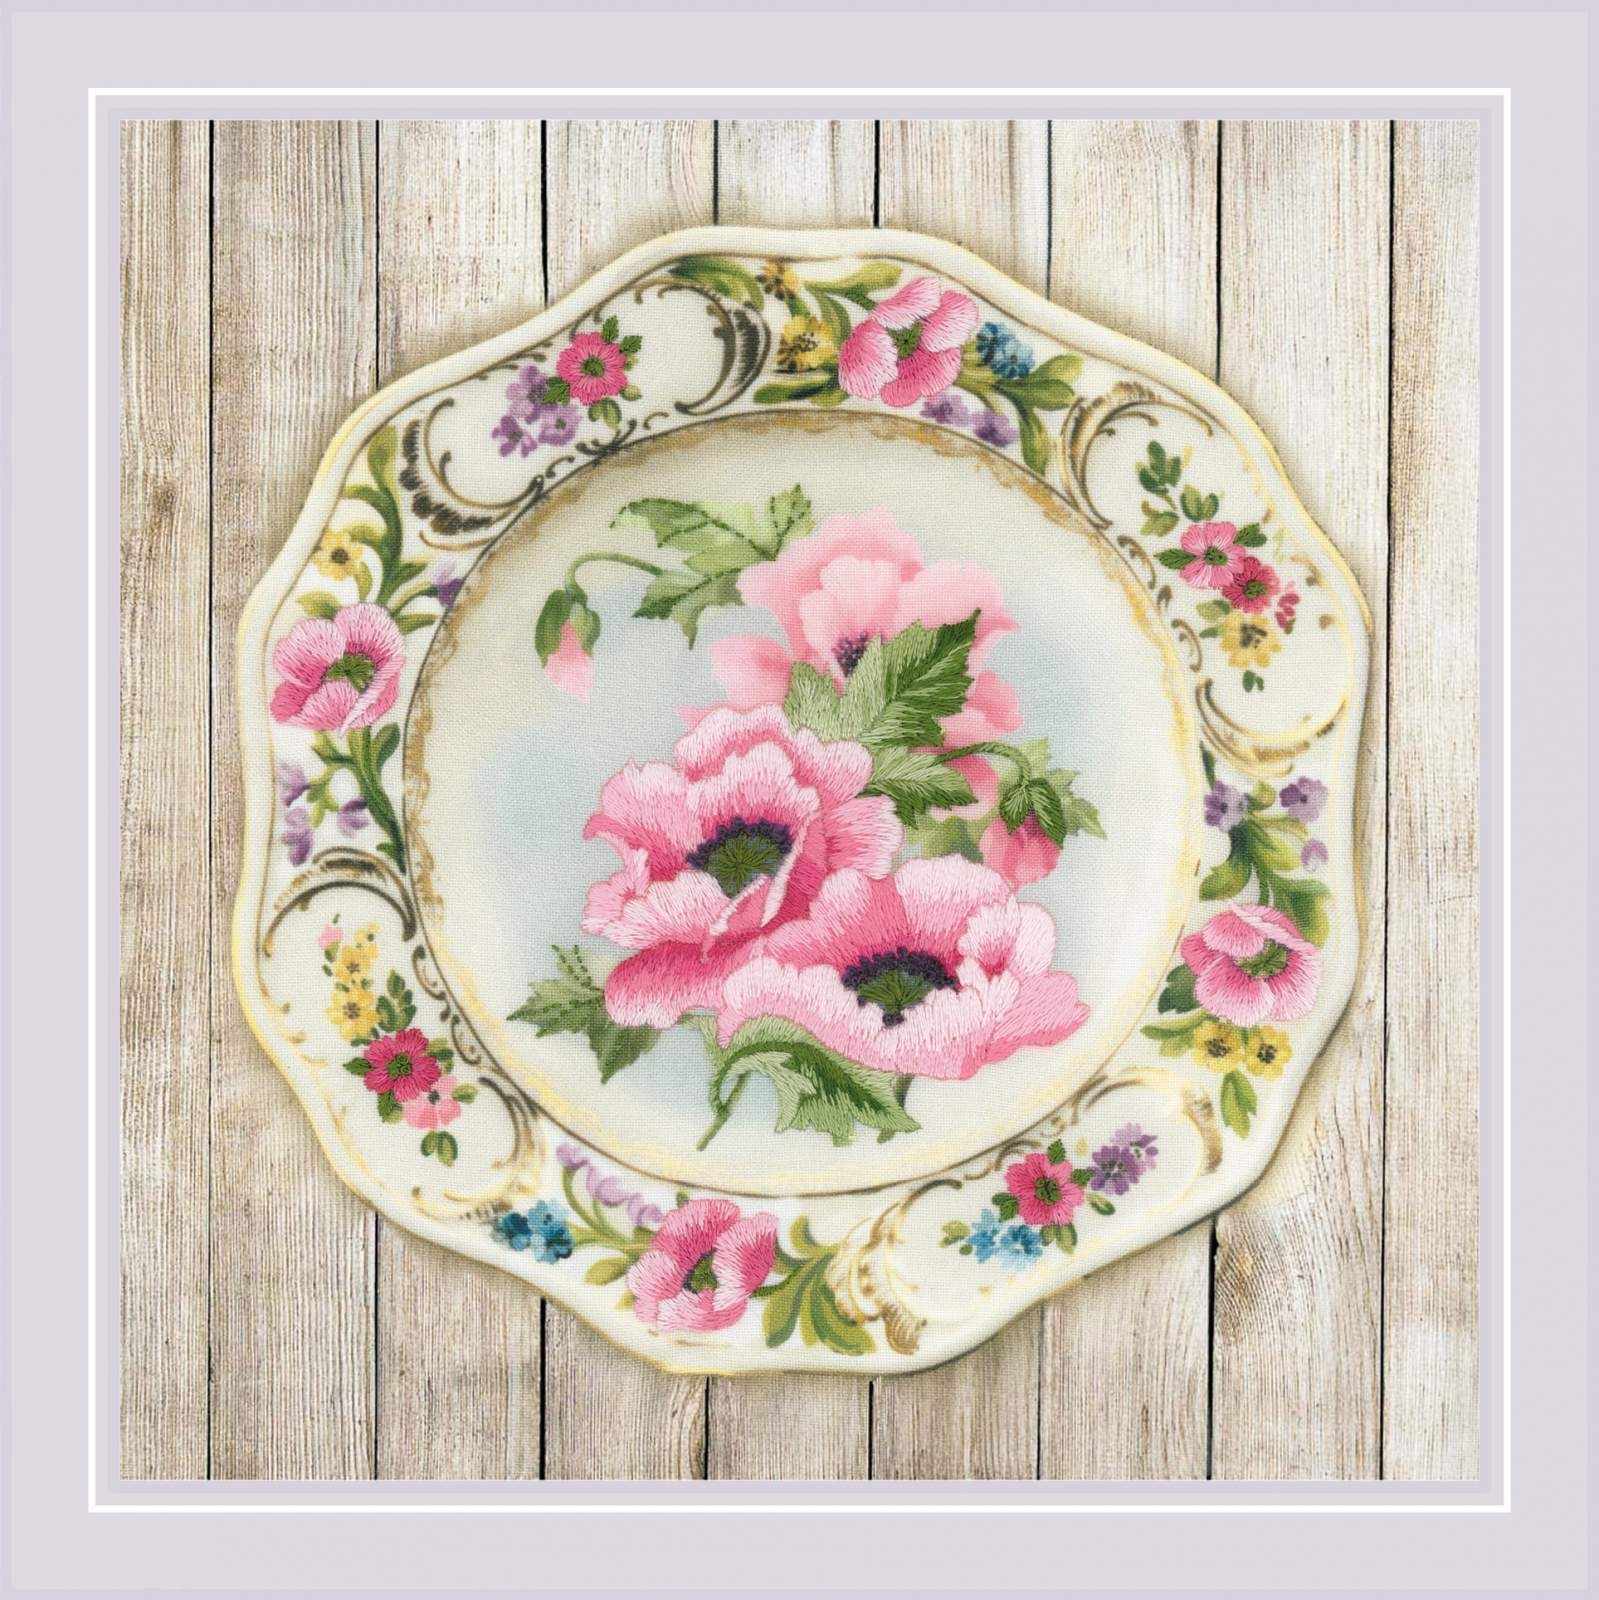 РТ0075 "Тарелка с розовыми маками. Гладь"